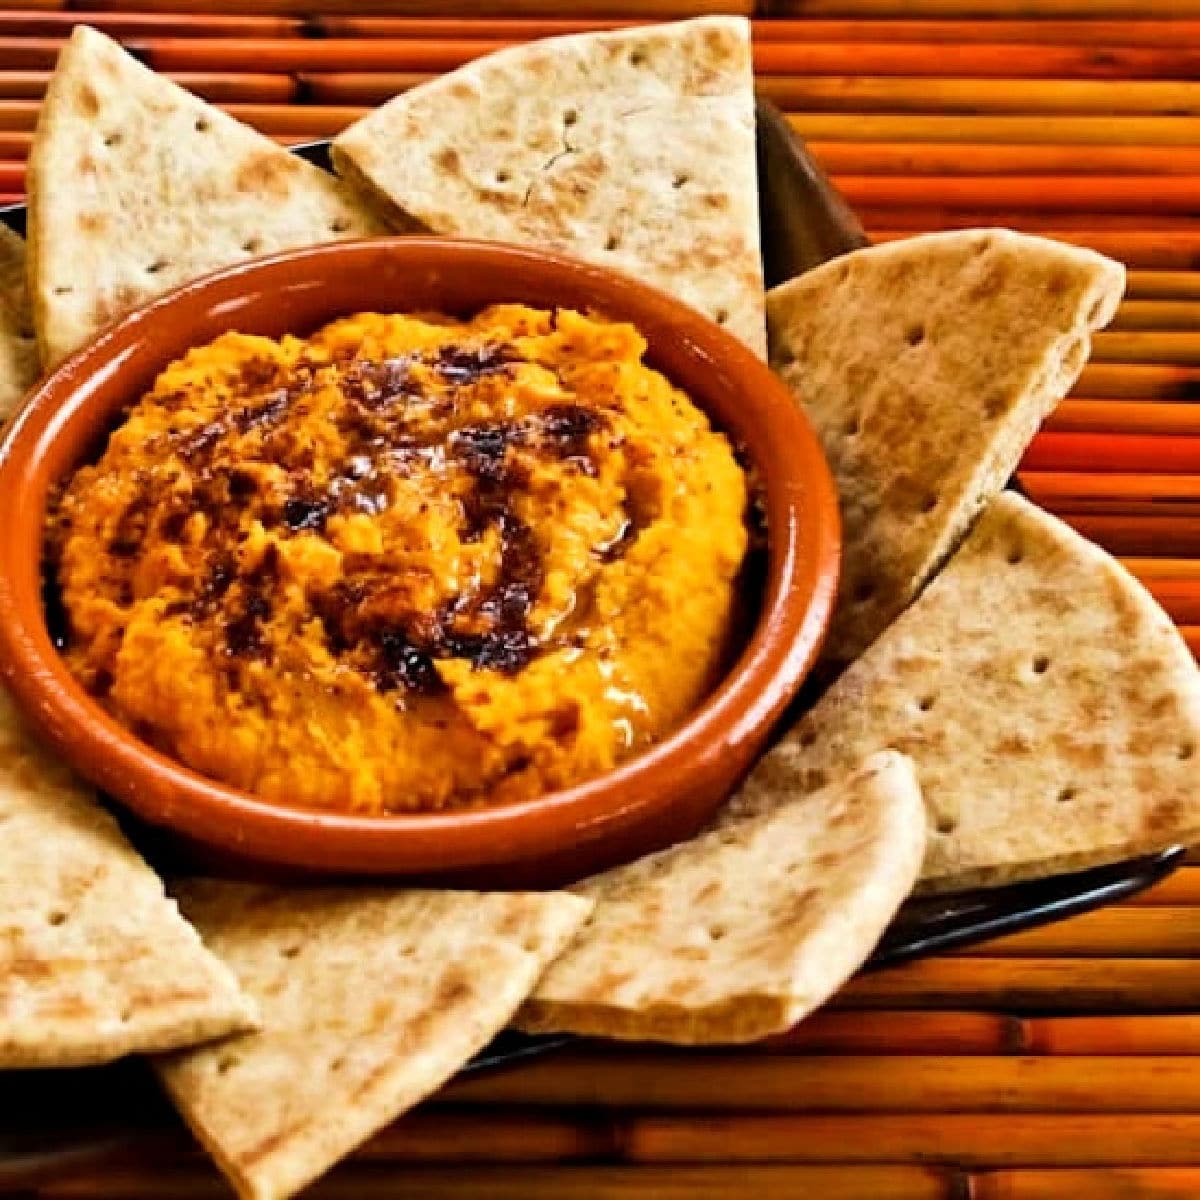 Sweet potato hummus shown in serving dish with pita bread around it.